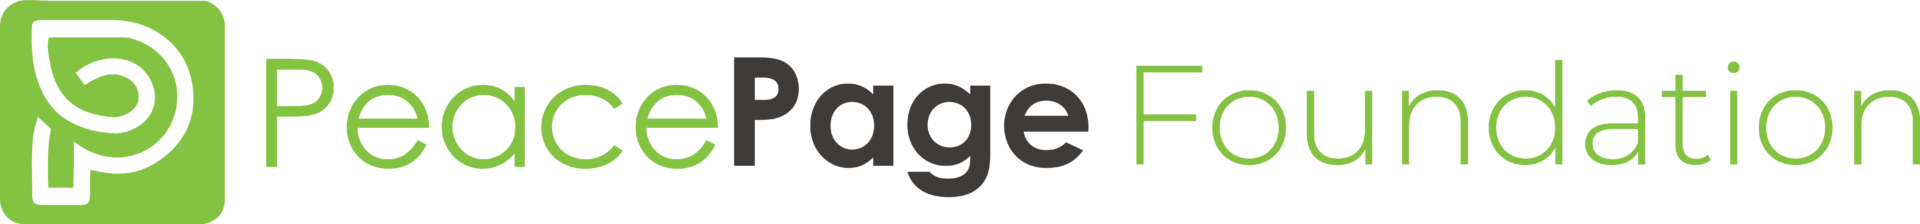 Peace Page Foundation Logo